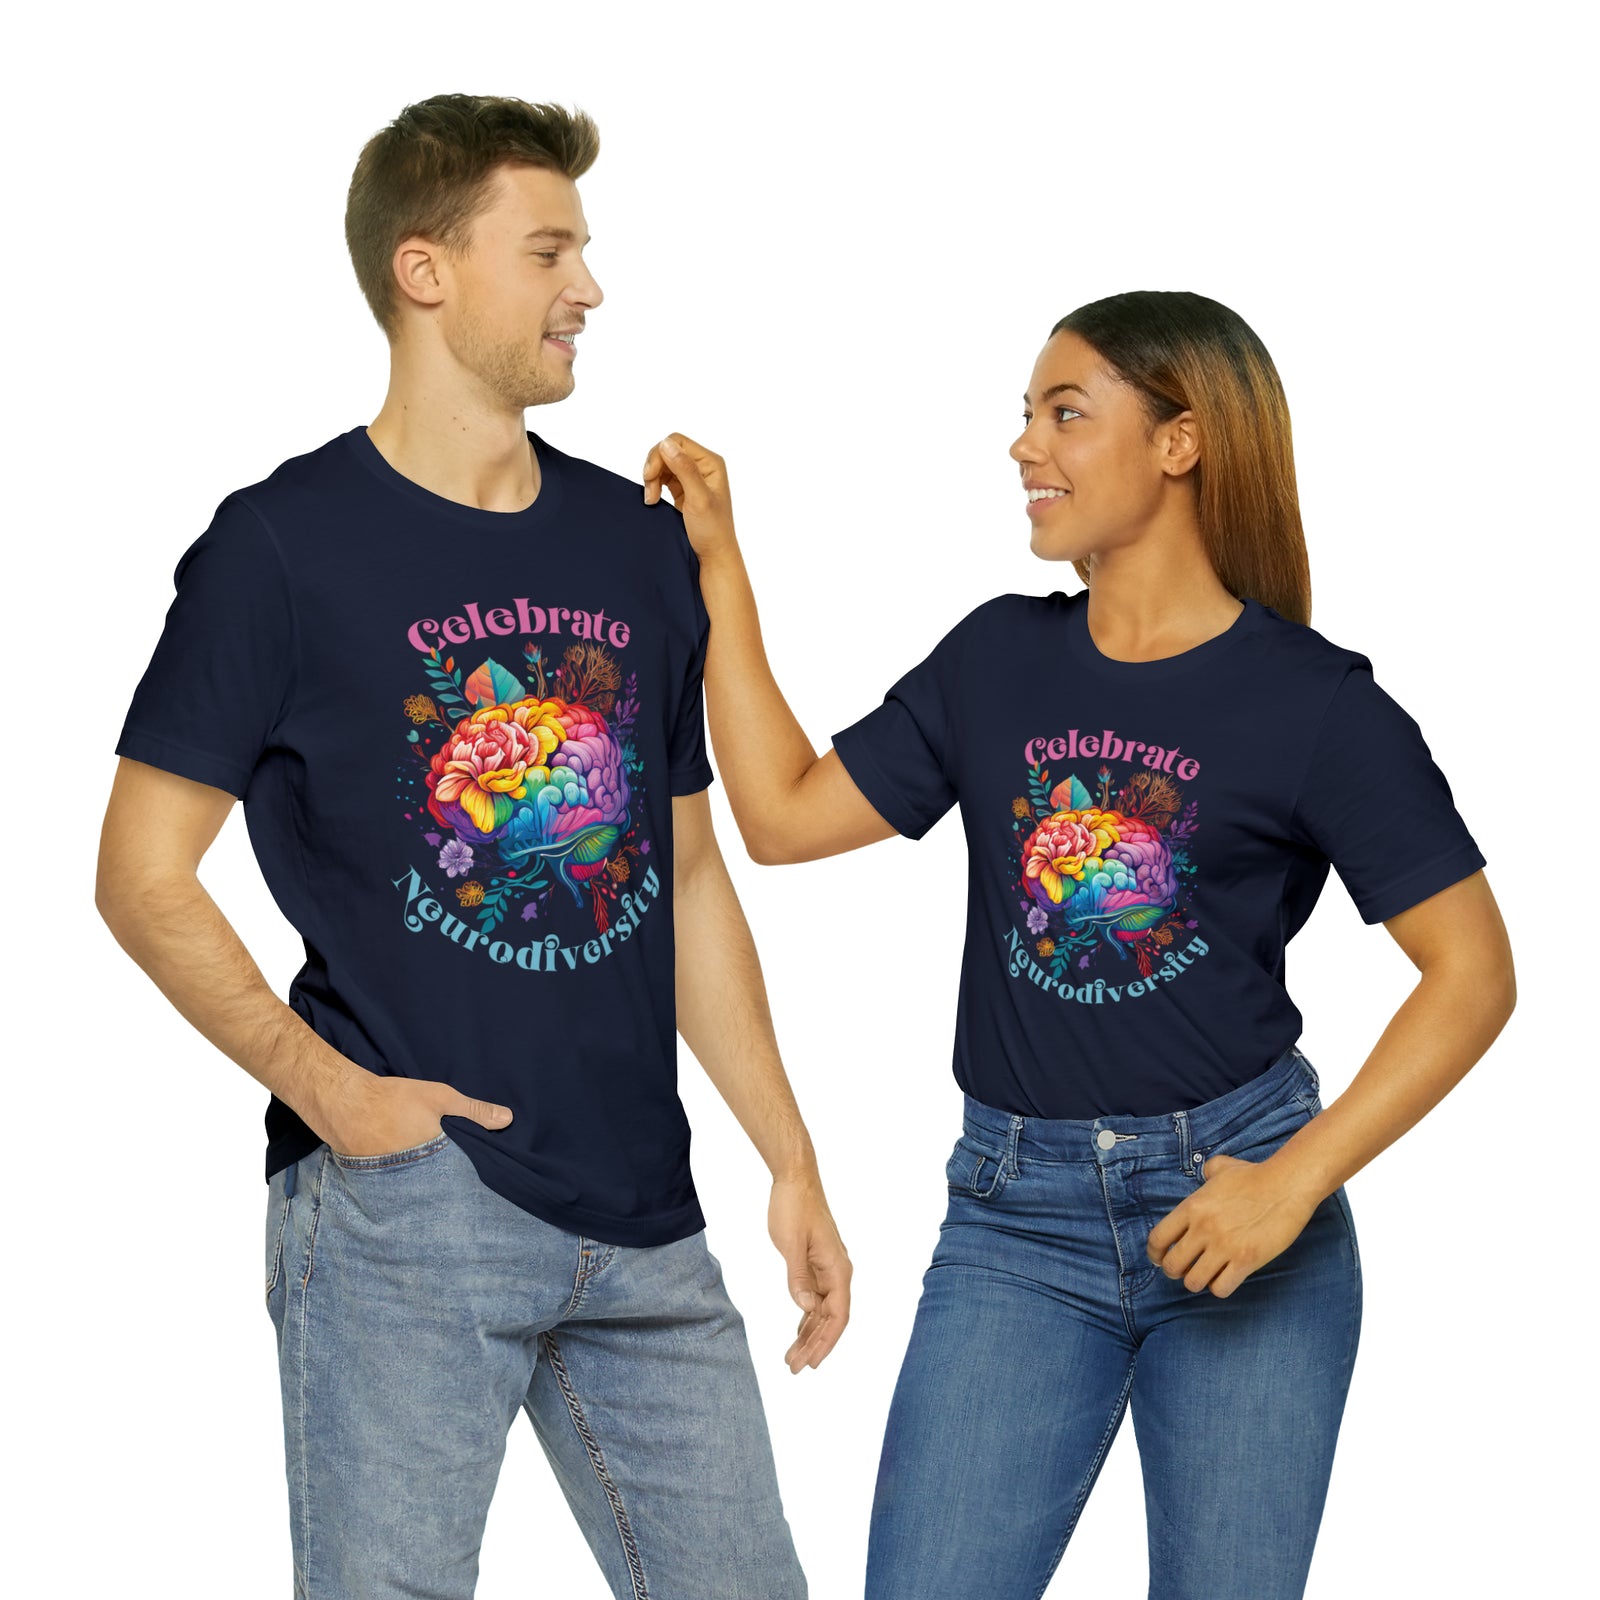 Celebrate Neurodiversity Shirt | Autism Shirt | Autism Awareness Shirt | Inclusion Shirt | Brain Art | Super Soft Tshirt | Unisex Jersey T-shirt